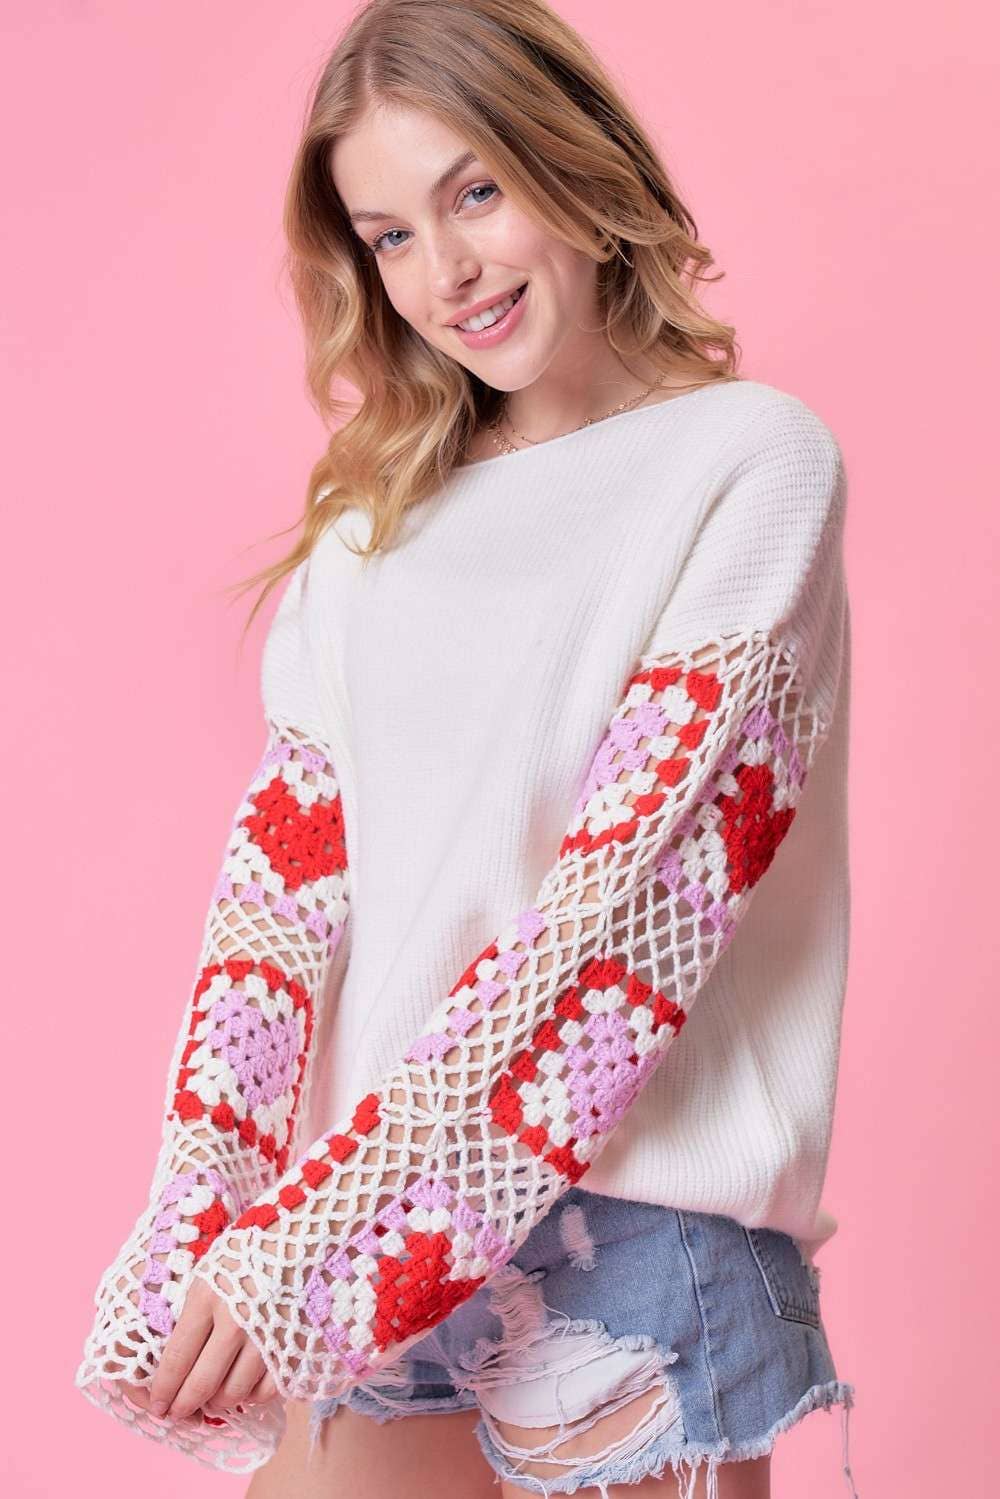 Main Strip - Sleeve Heart Crochet Sweater